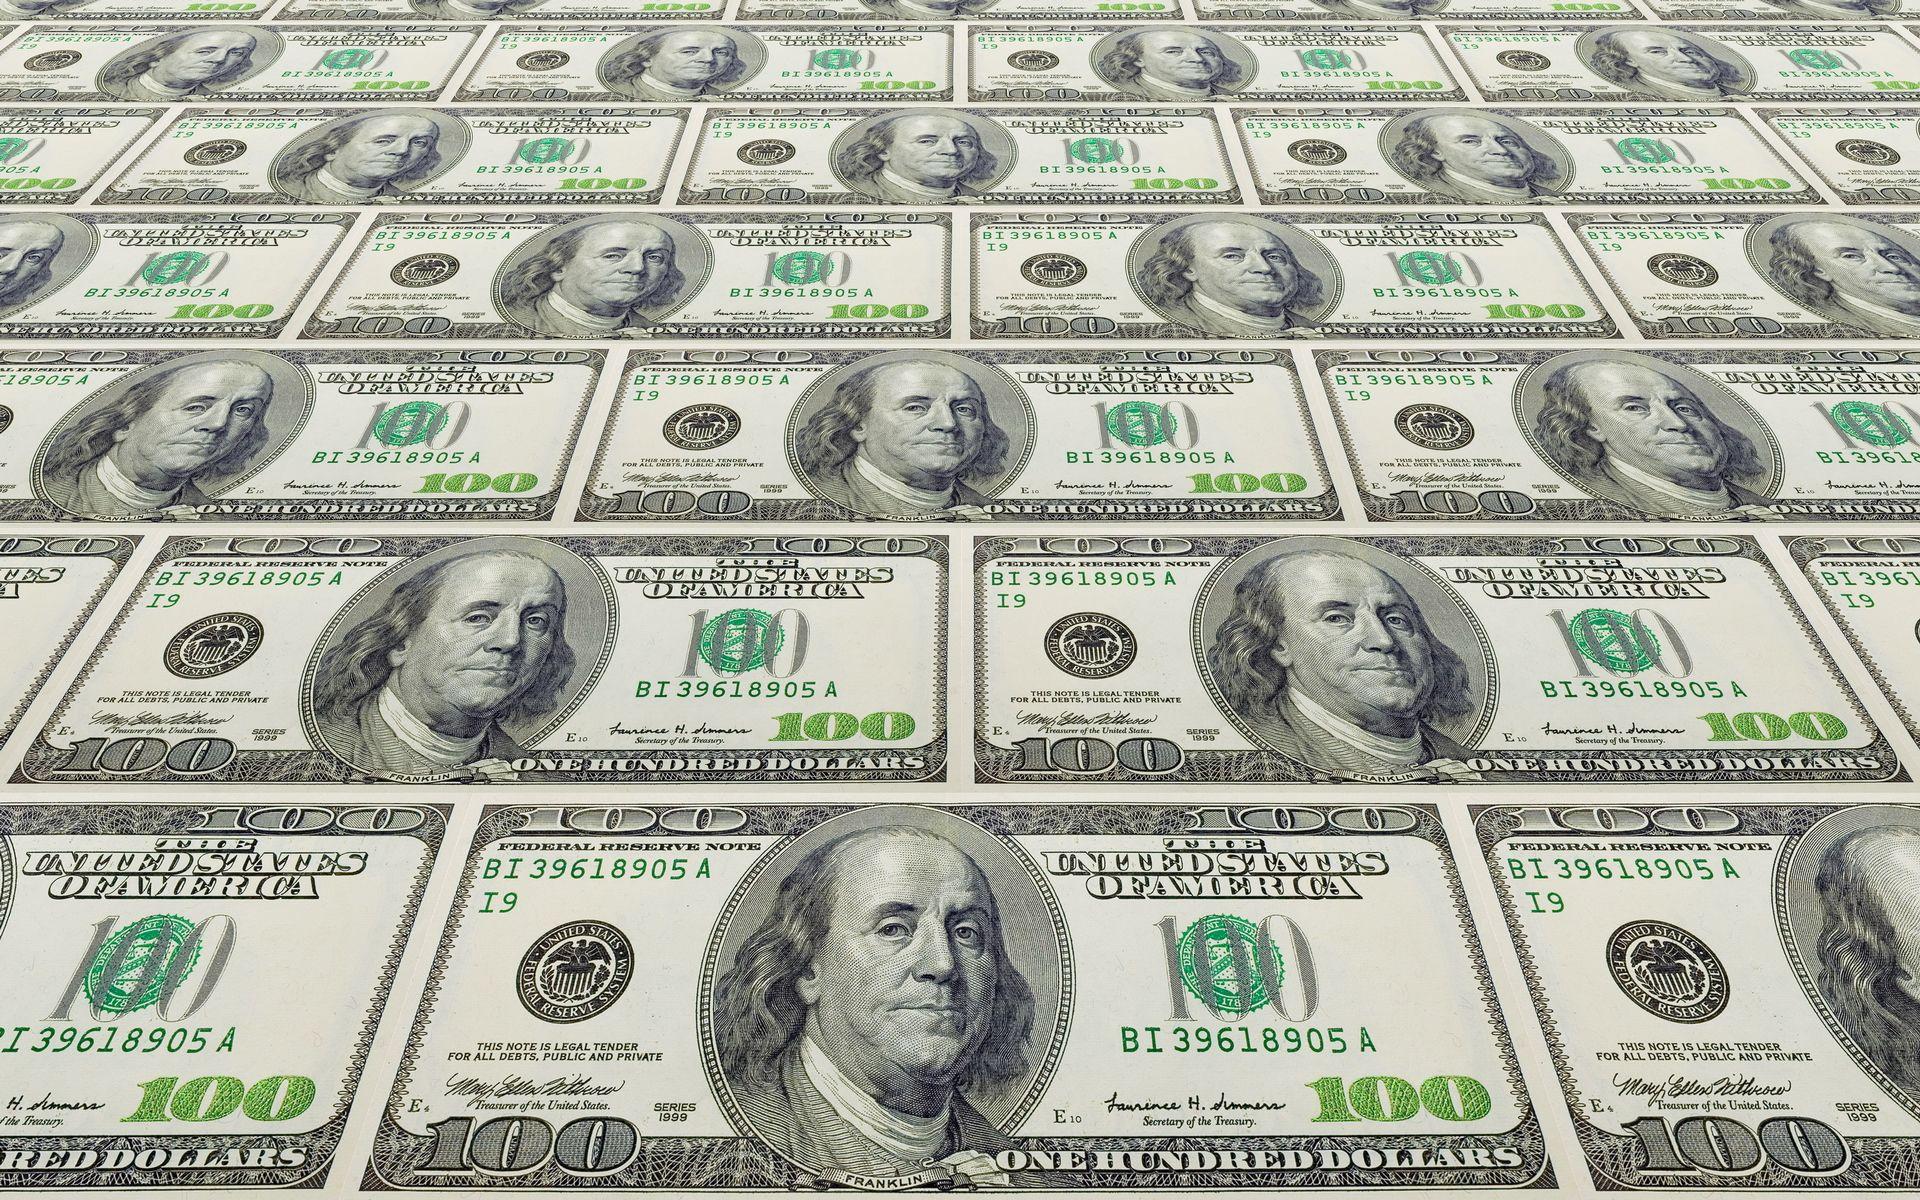 Download wallpaper: money, new dollars, download photo, wallpaper